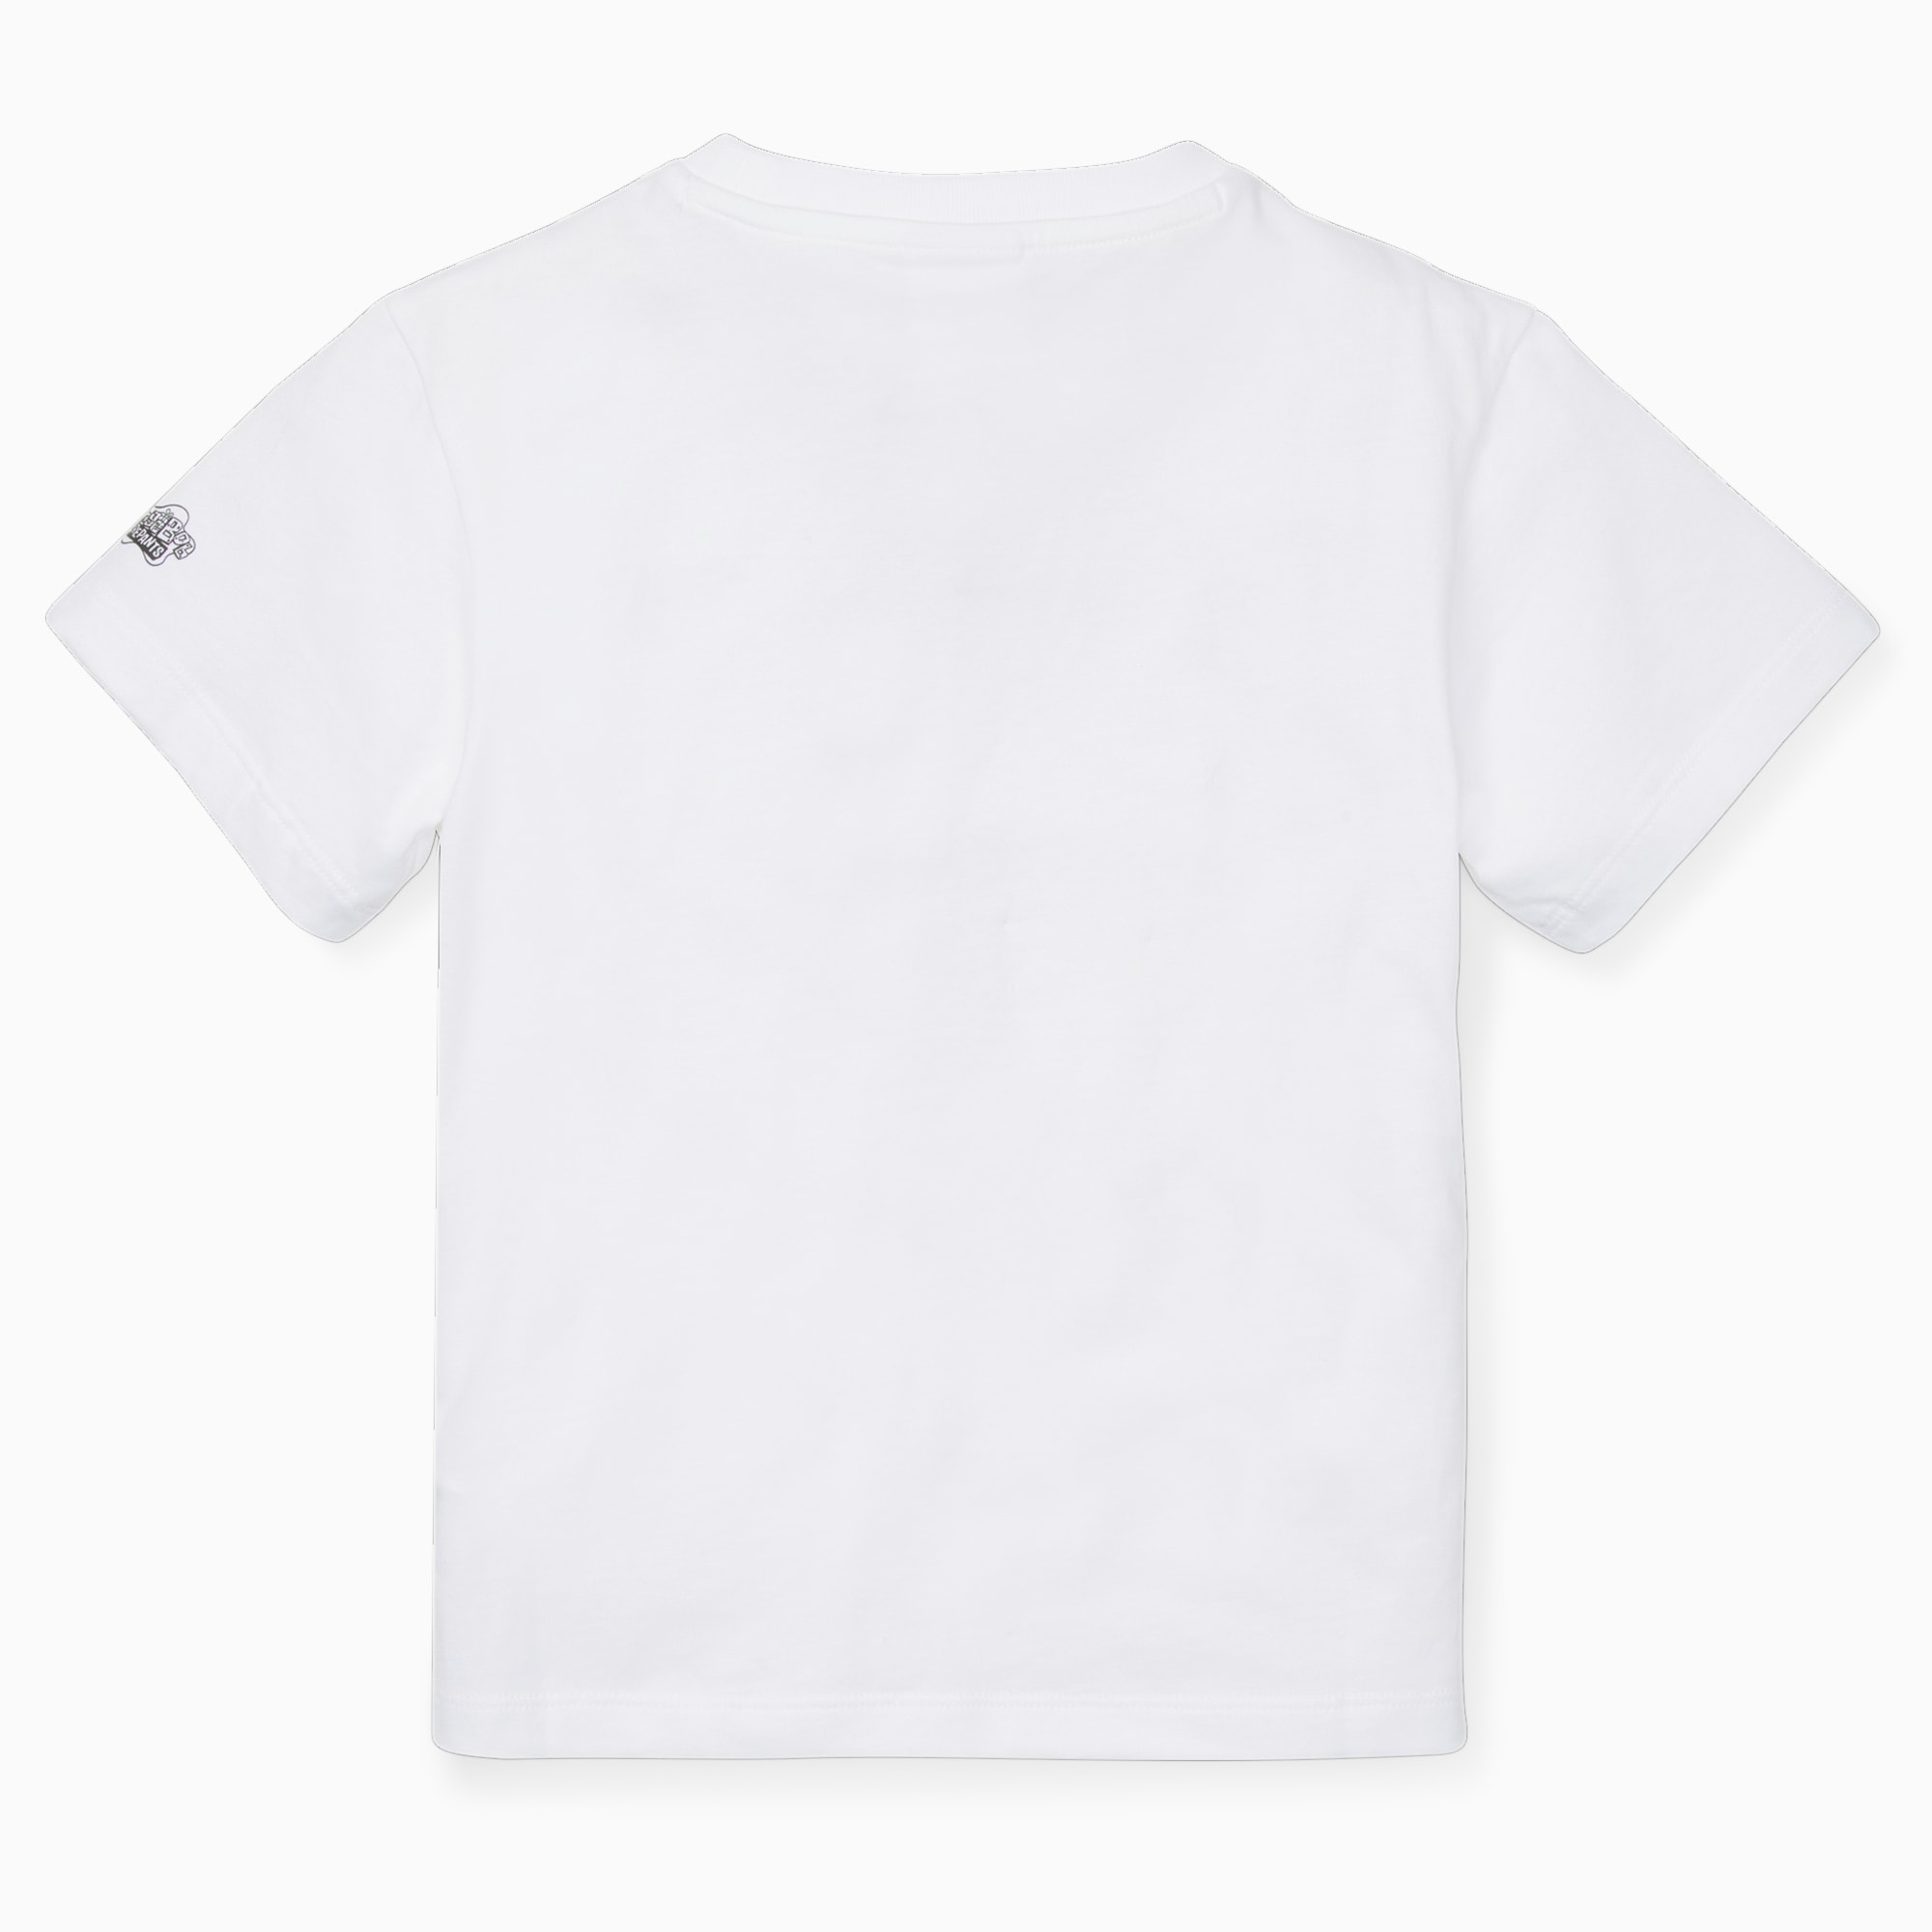 PUMA X SPONGEBOB T-Shirt Kinder, Weiß, Größe: 98, Kleidung